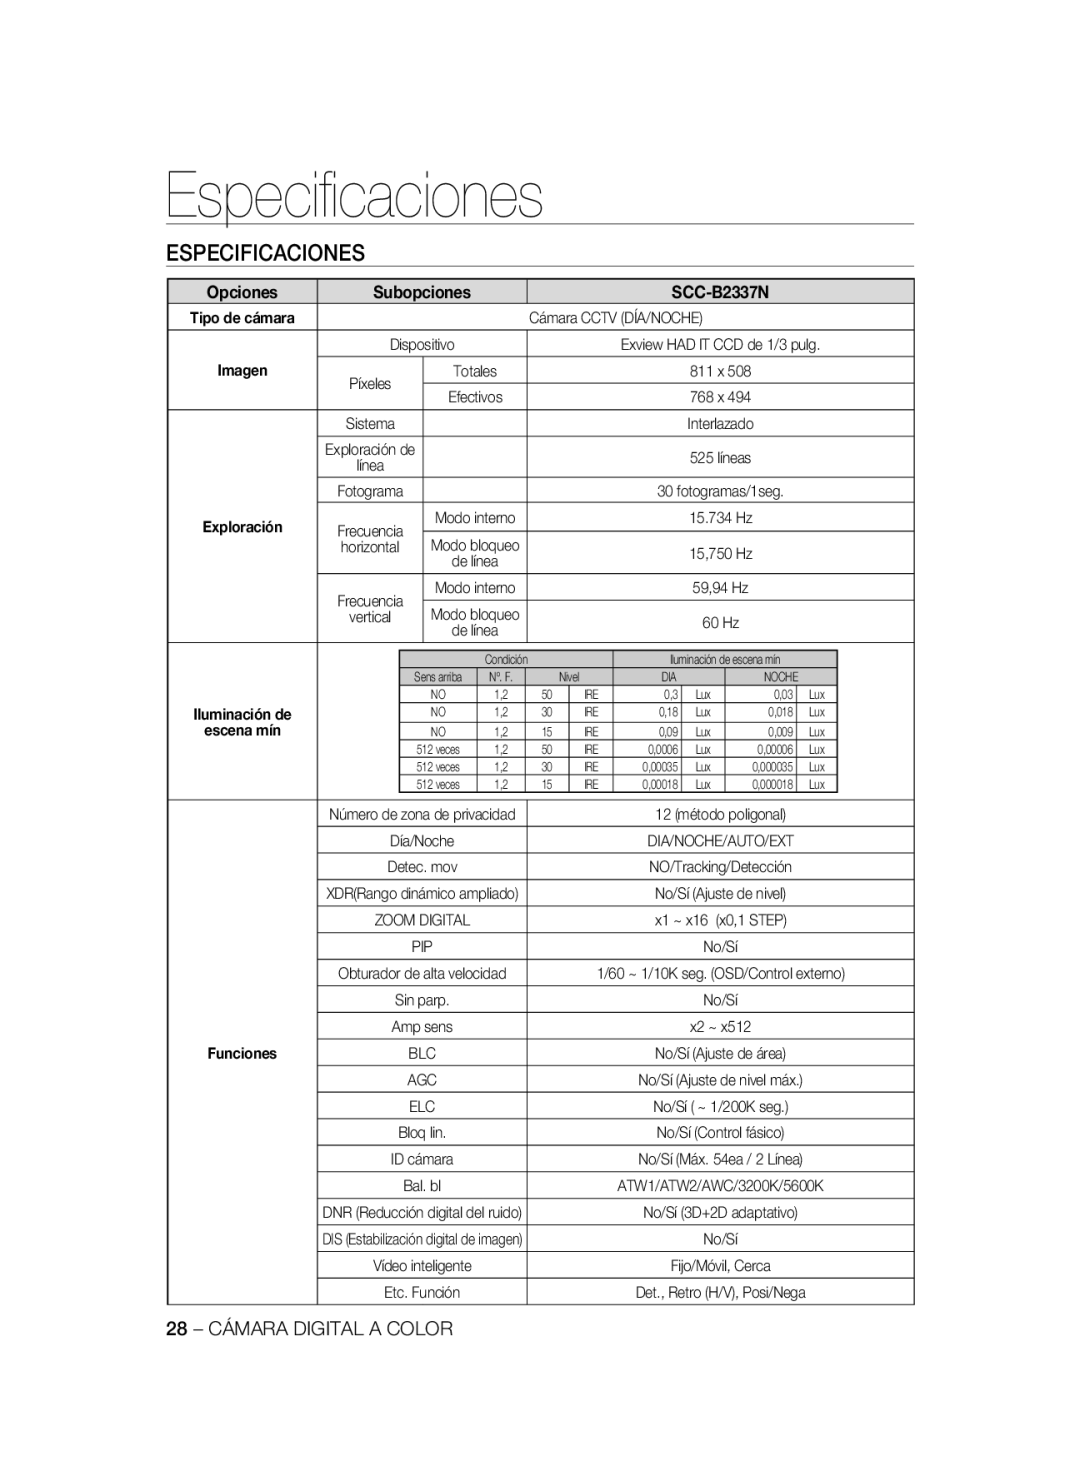 Samsung SCC-B2337P, SCC-B2037P Especiﬁcaciones, Especificaciones, Opciones, SCC-B2337N, Subopciones, escena mín, Funciones 